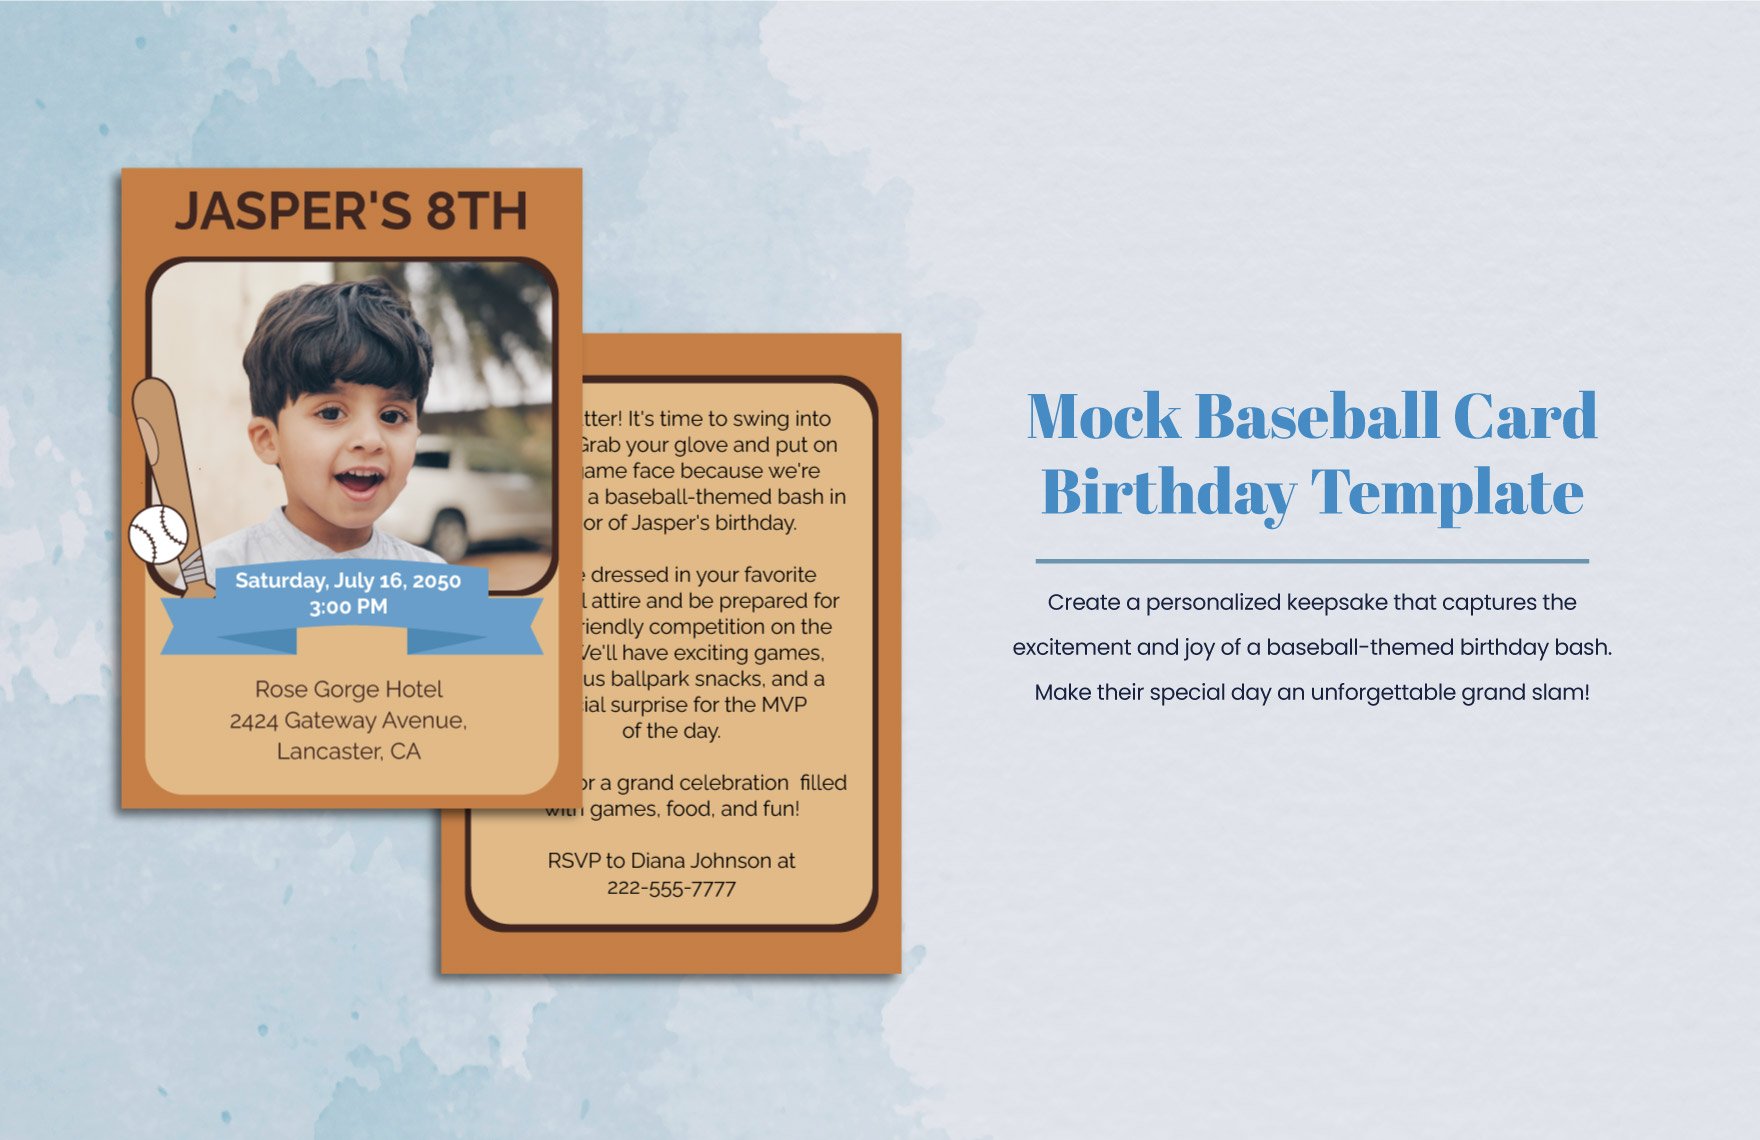 Mock Baseball Card Birthday Template